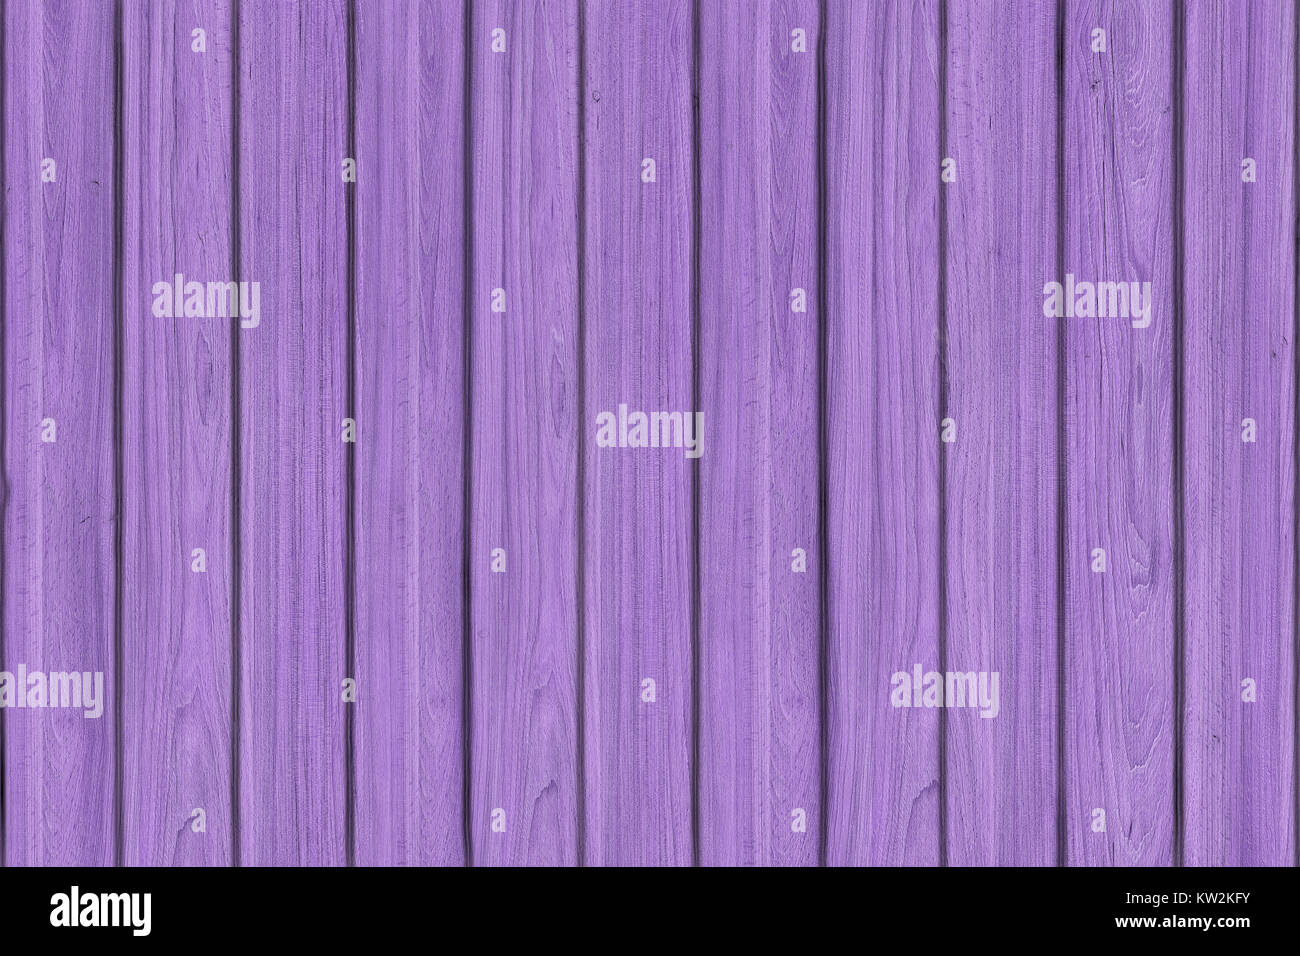 purple grunge wood pattern texture background, wooden planks. Stock Photo